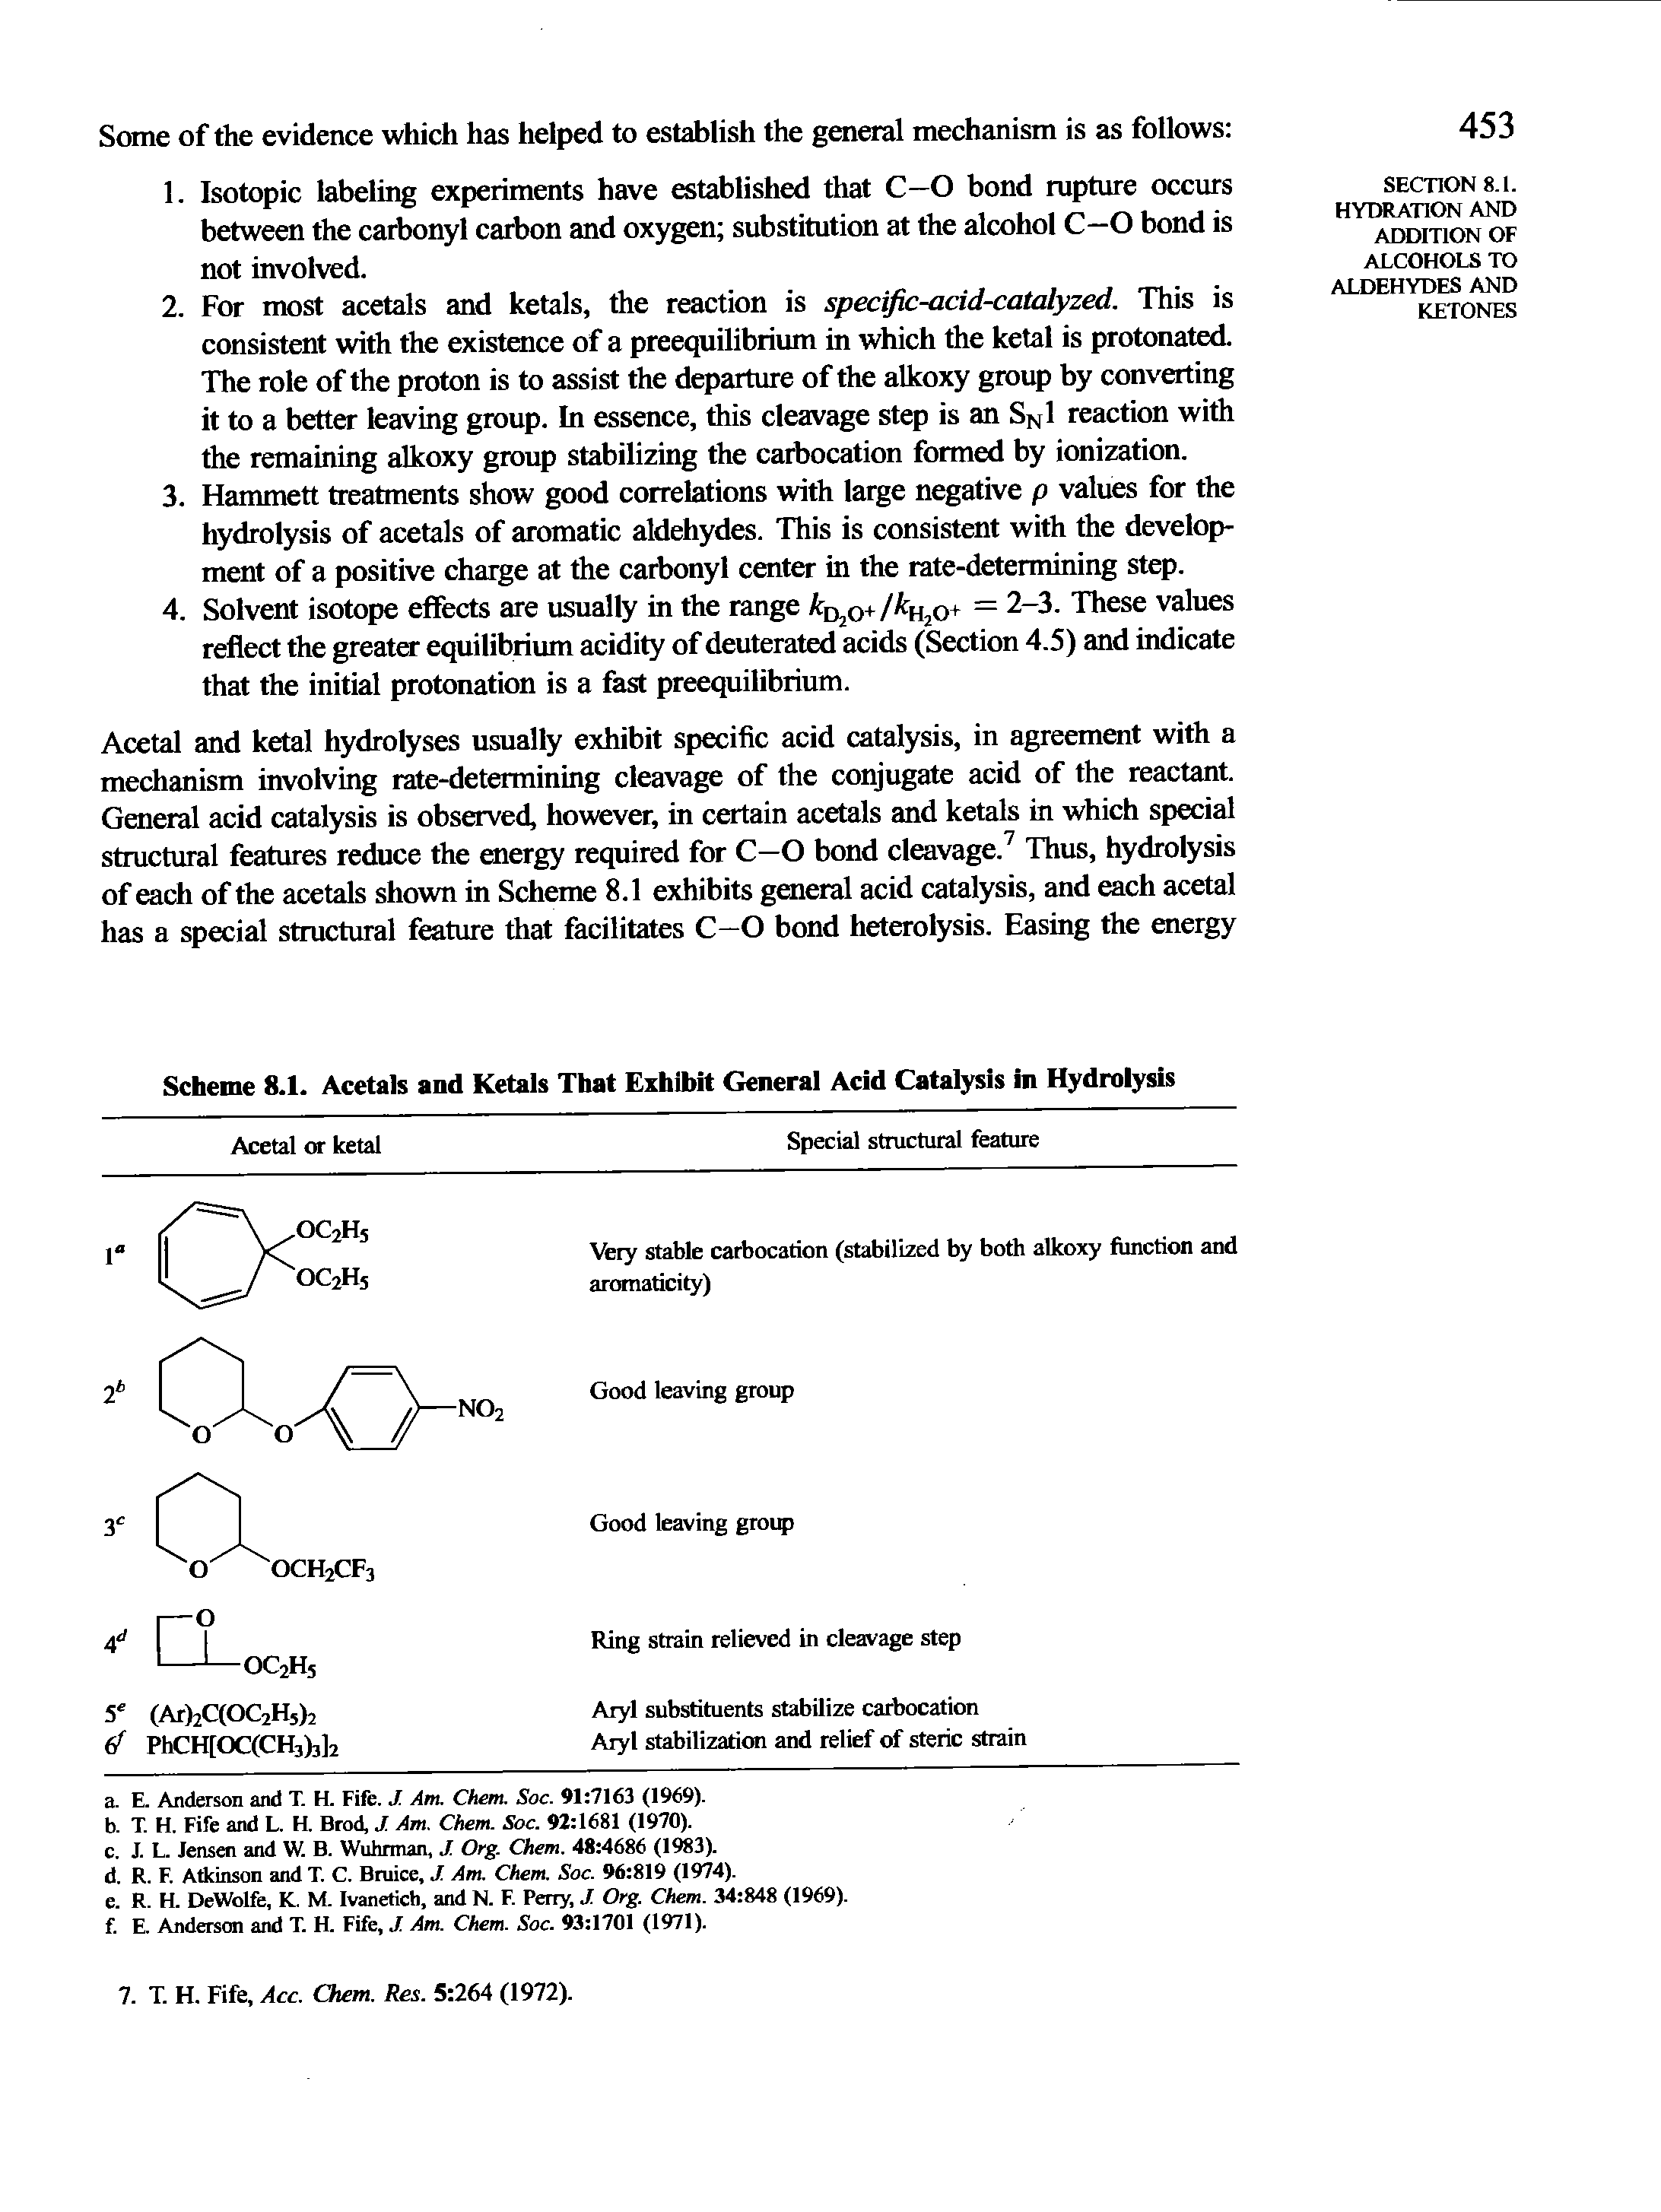 Scheme 8.1. Acetals and Ketals That Exhibit General Acid Catalysis in Hydrolysis...